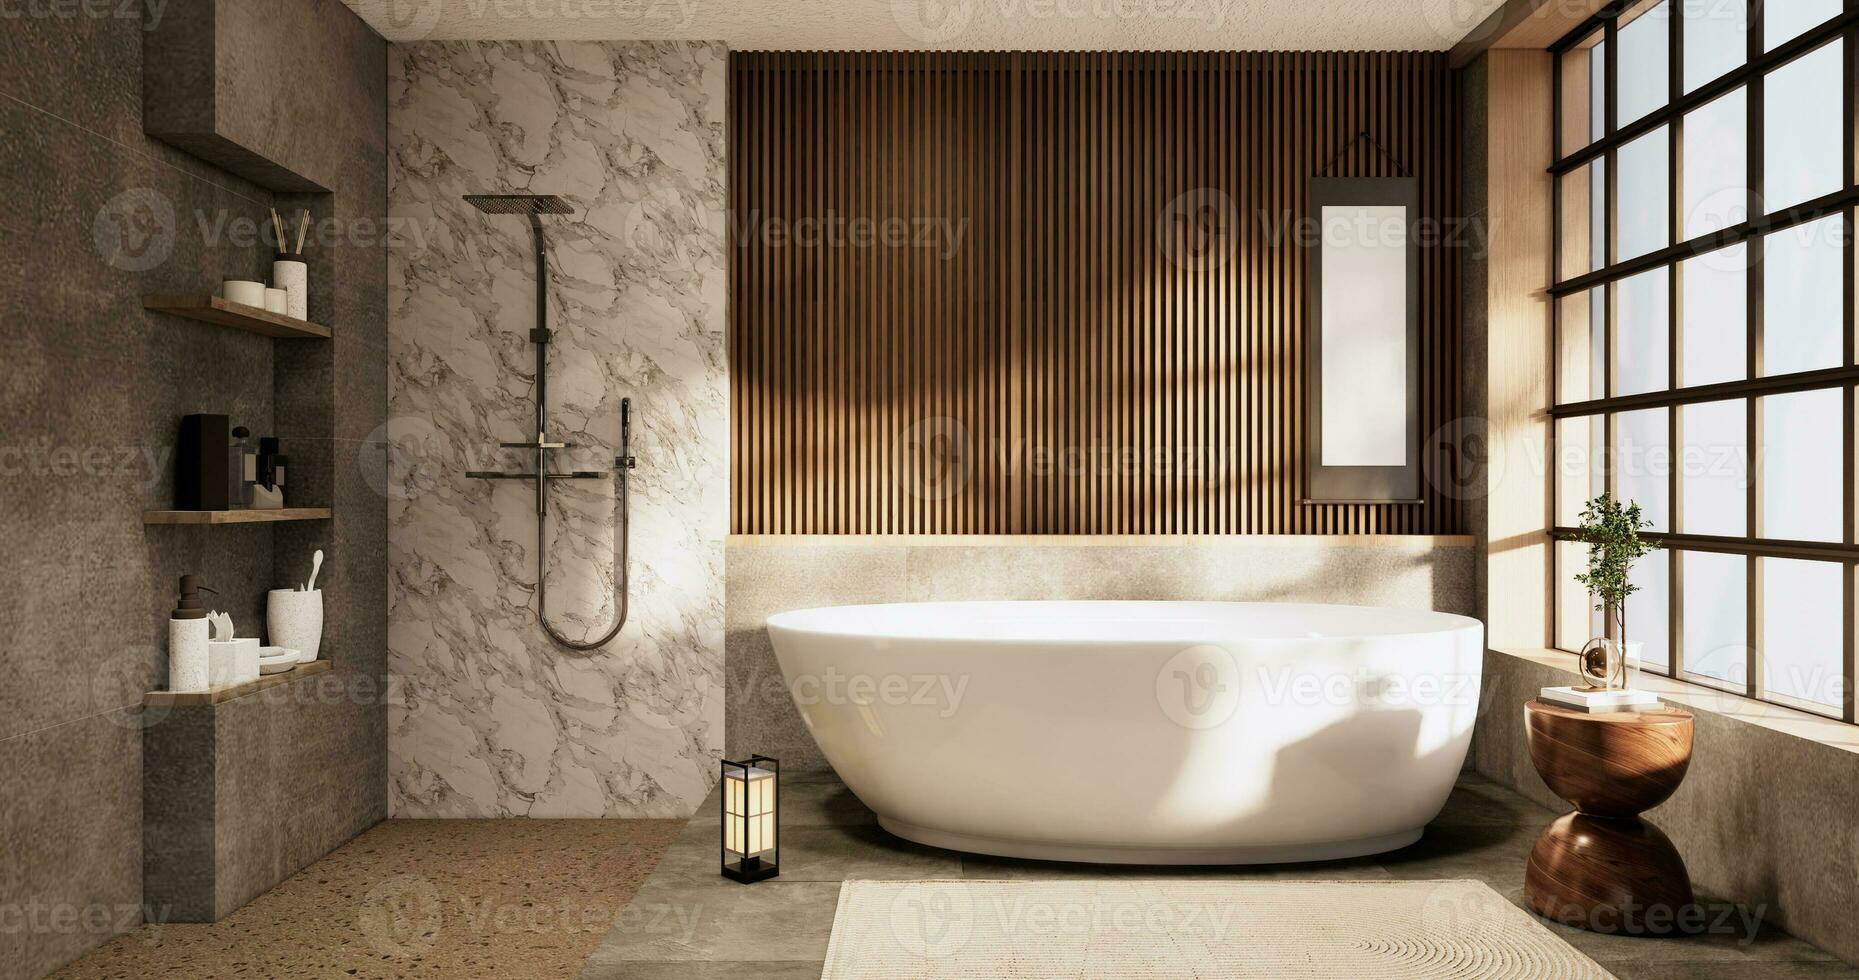 The Bath and toilet on bathroom japanese wabi sabi style .3D rendering photo